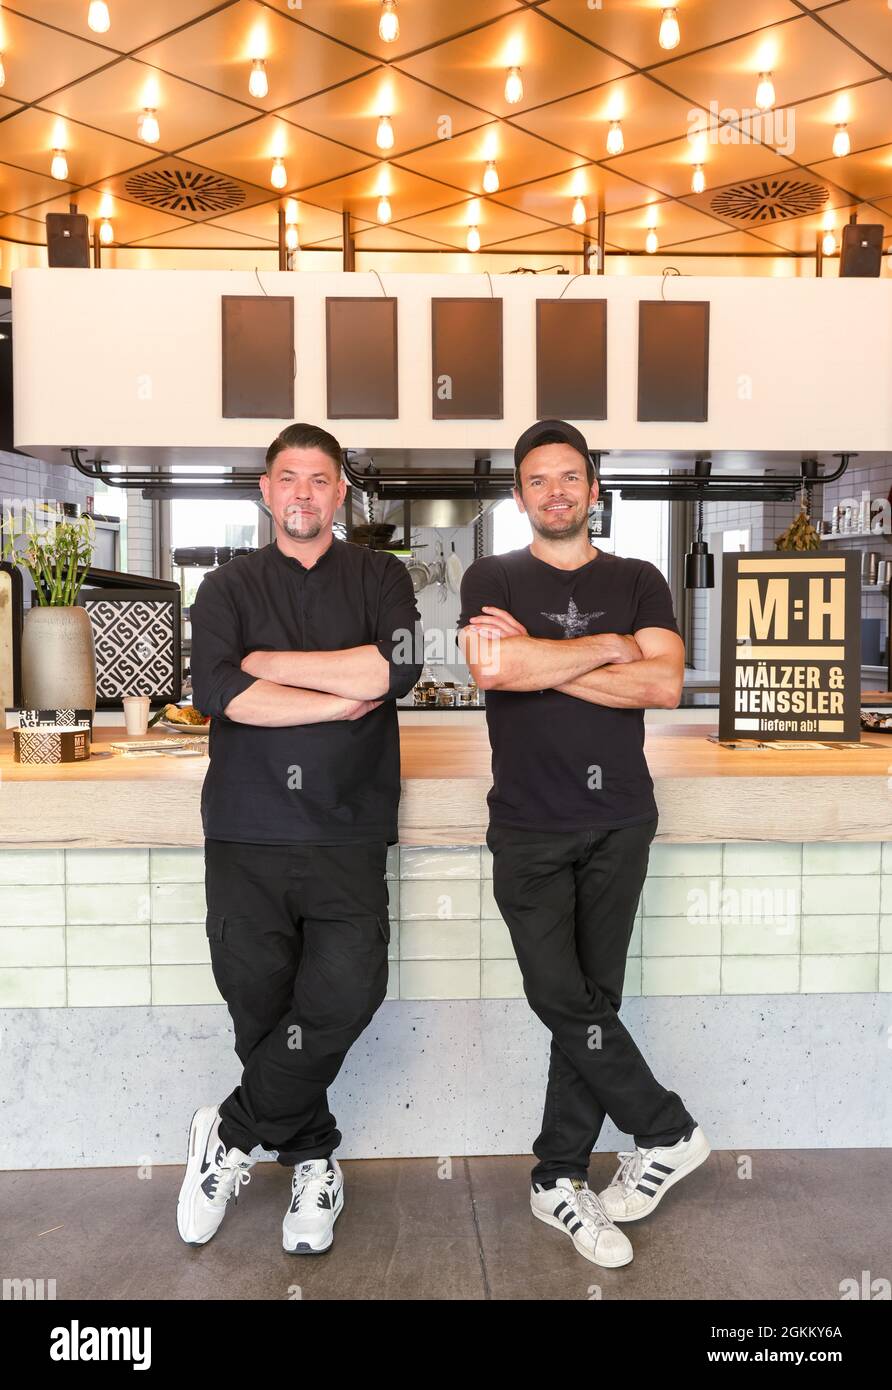 Hamburg, Germany. 30th July, 2021. Hamburg chefs Tim Mälzer (l) and Steffen  Henssler present their new cooking show "Mälzer und Henssler liefern ab!",  which will air on Vox in the fall. This